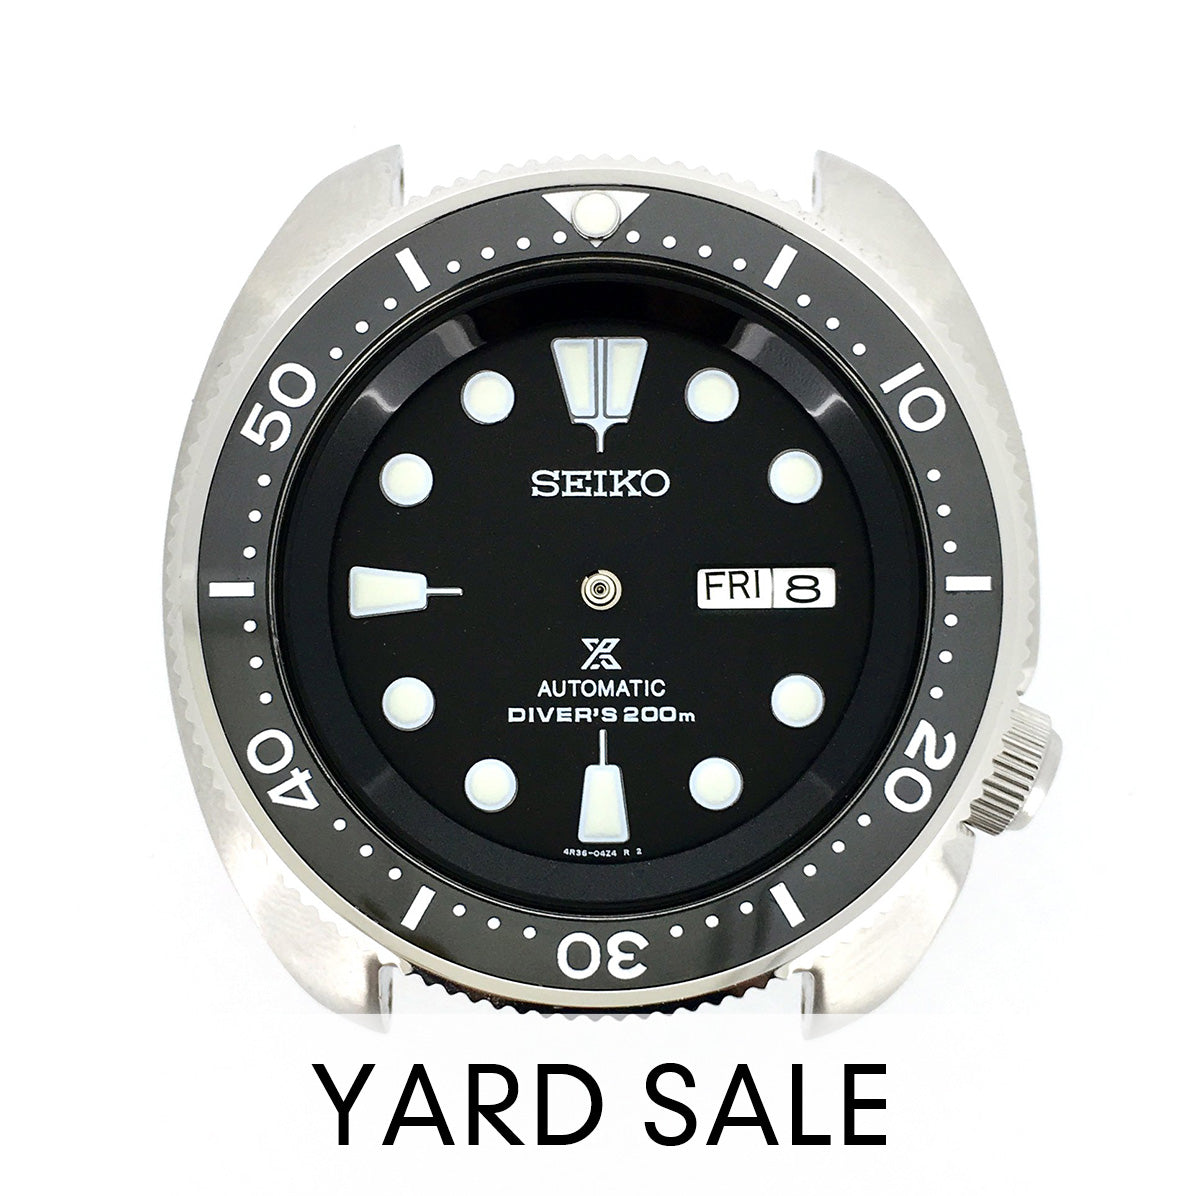 YARD SALE - C.R. - Turtle Re-issue  - Polished Black